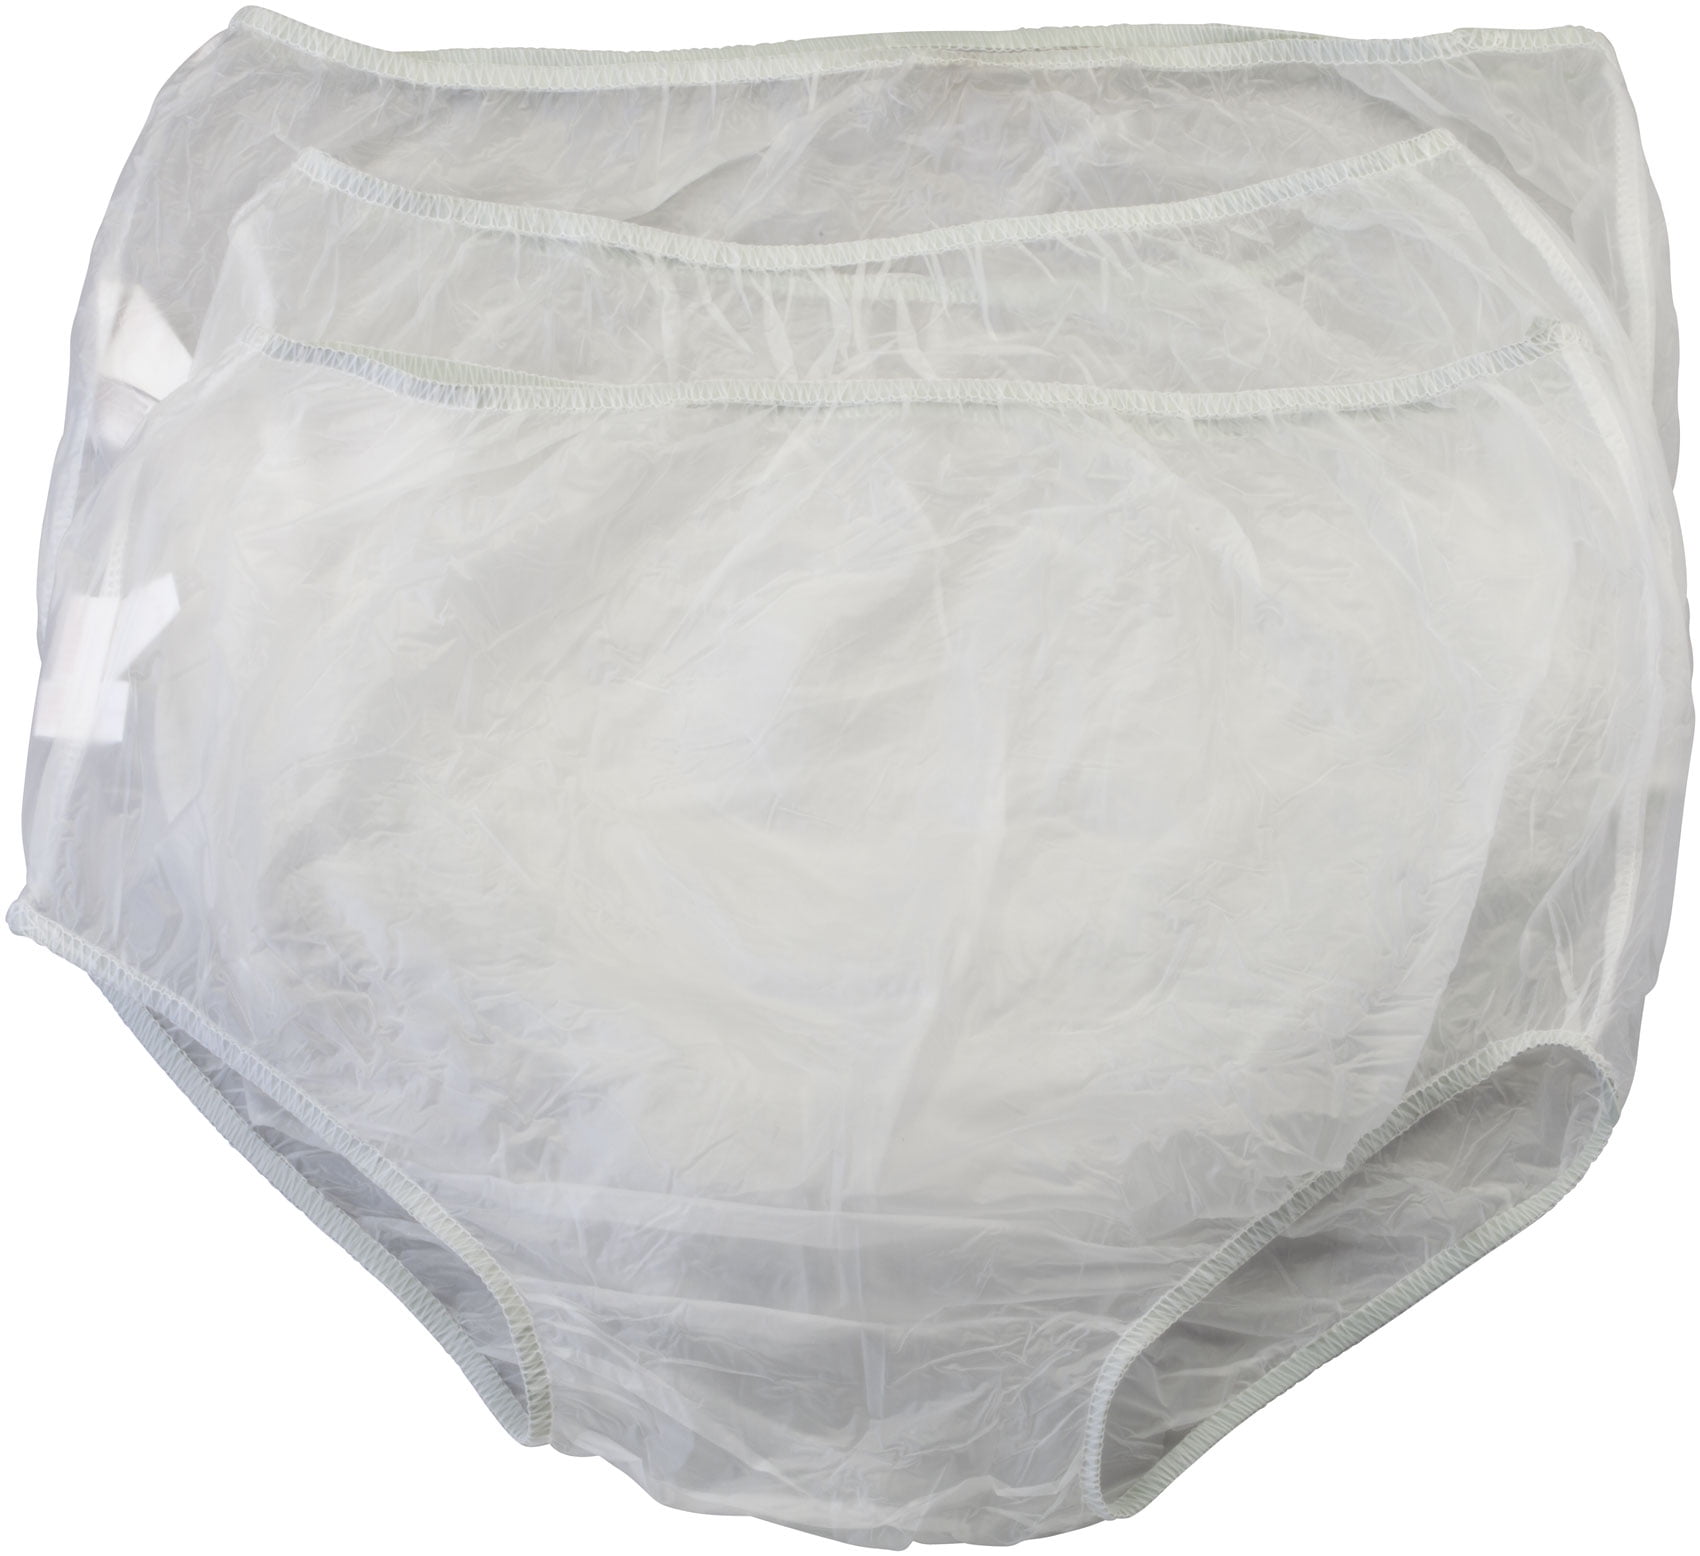 Leak Master Brand Adult PlasticRubber Pants